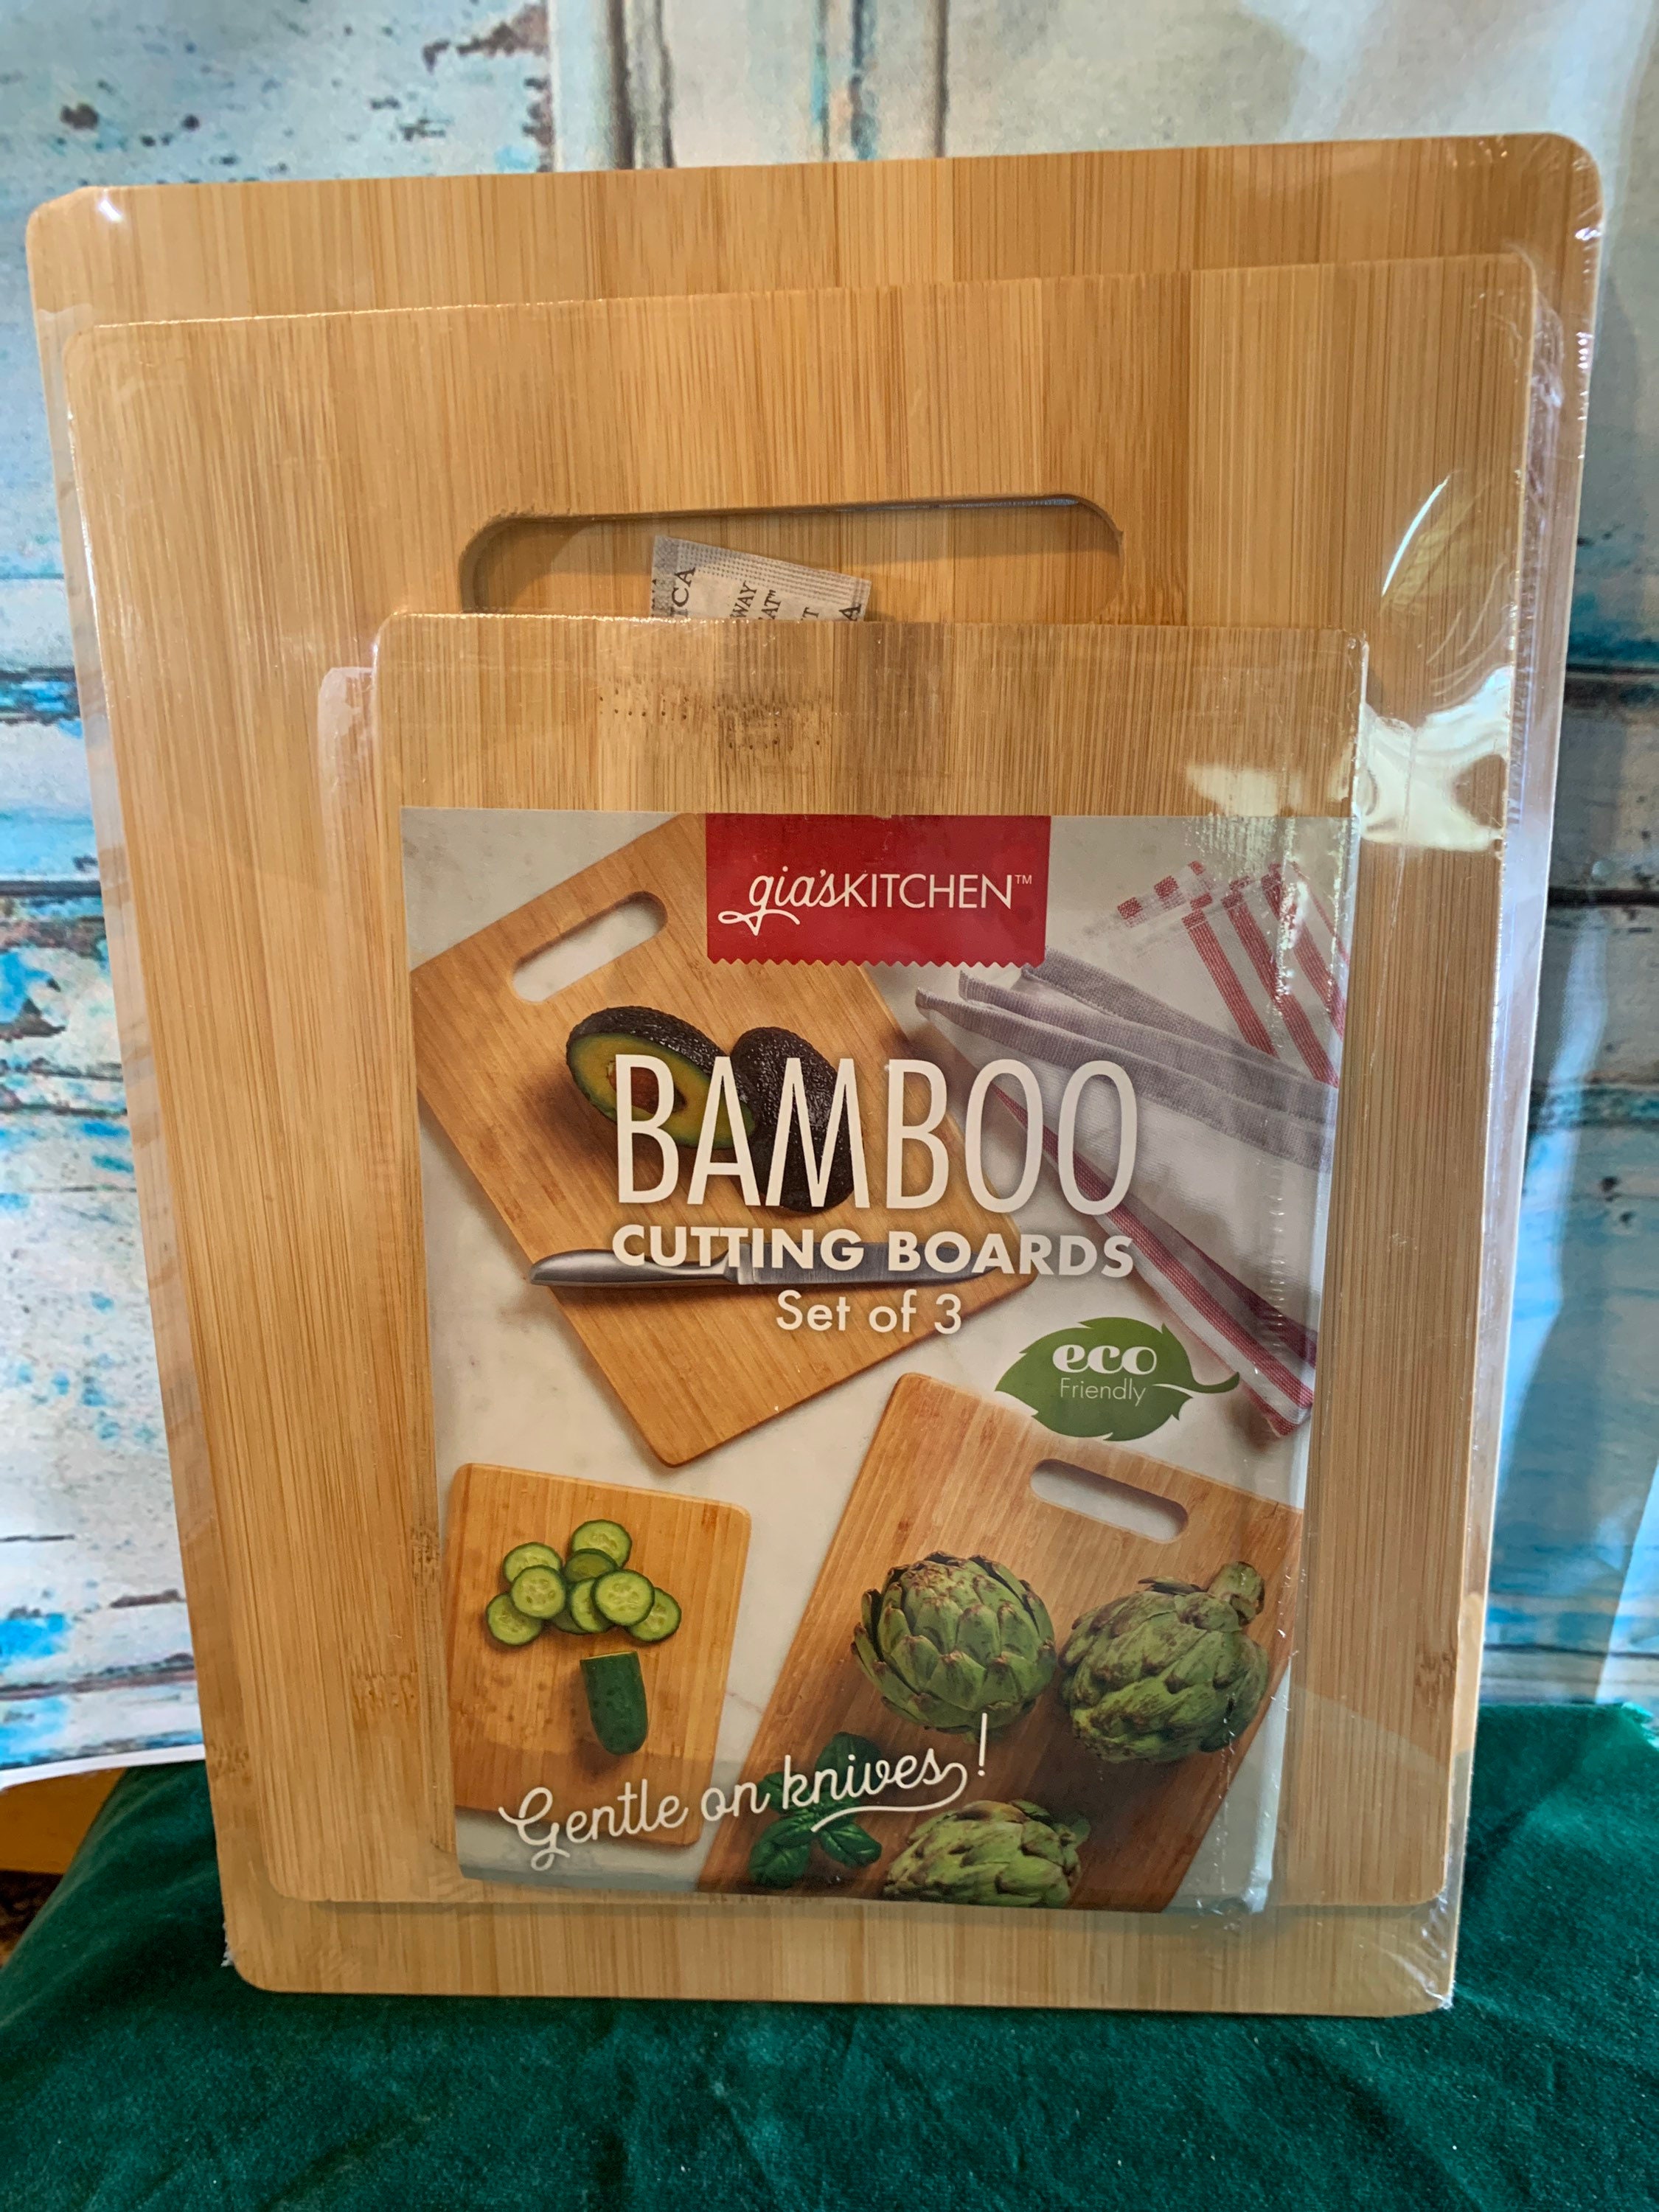 Organic Bamboo Personalized Cutting Board (Best Husband) - Cutting